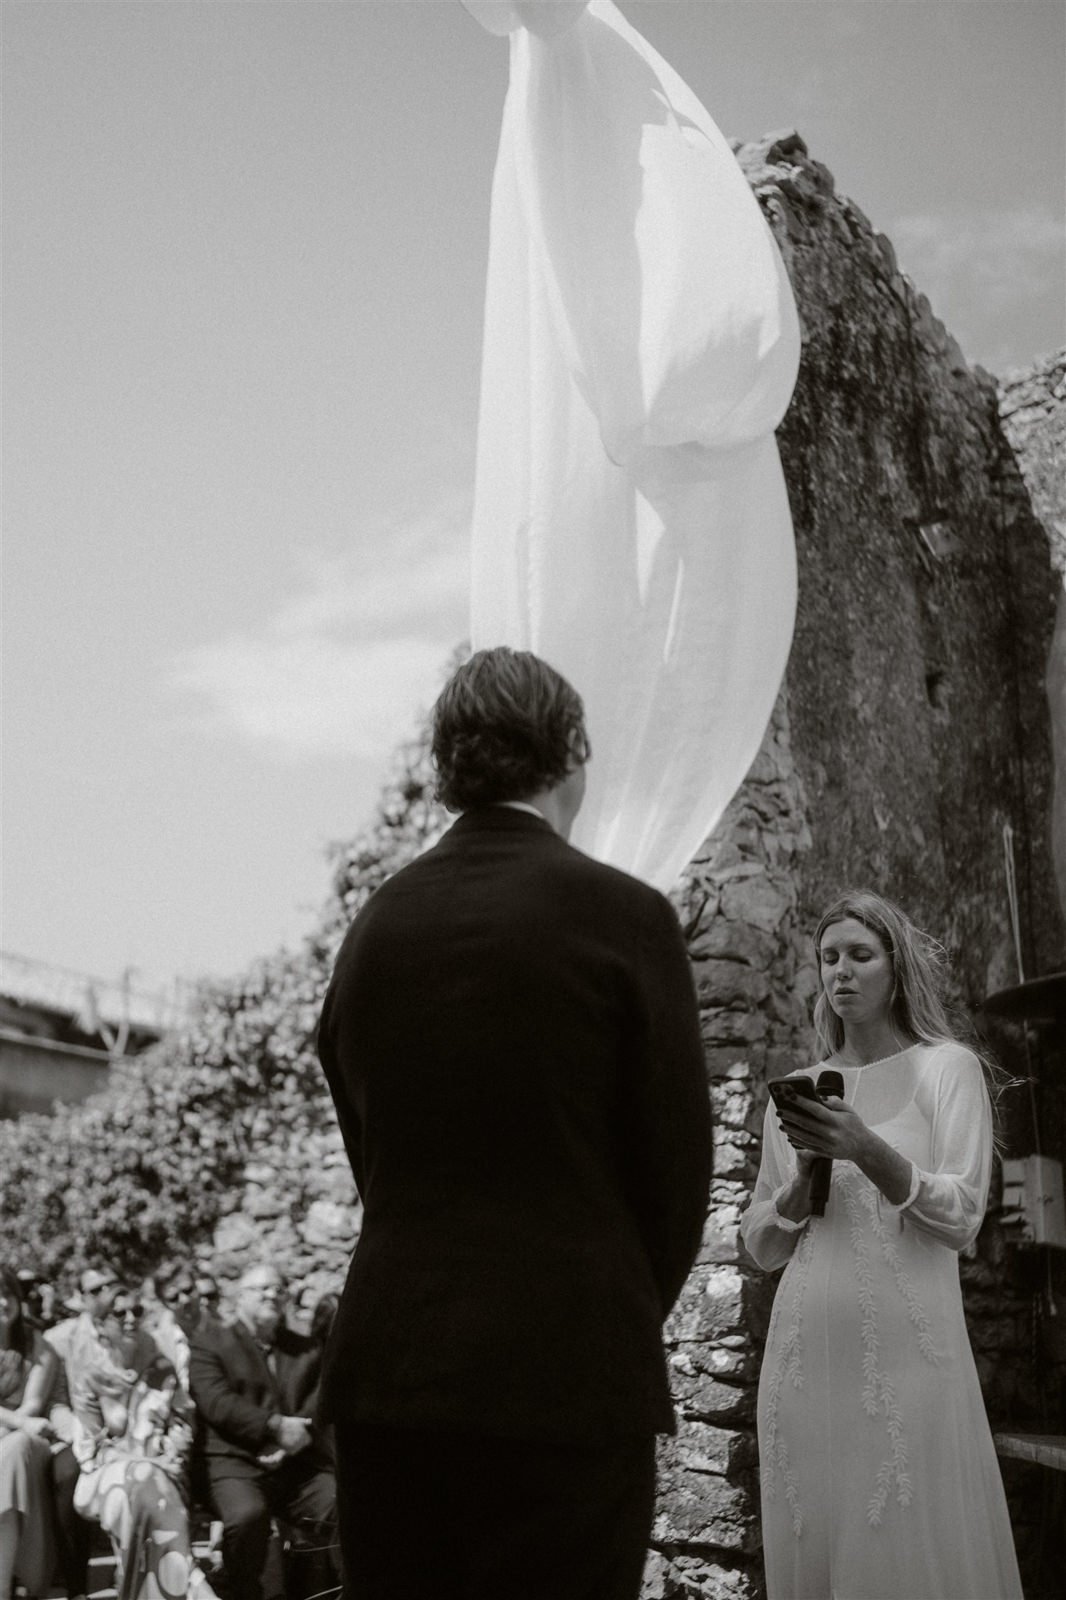 the-wonder-lisbon-wedding-photography-40.jpg